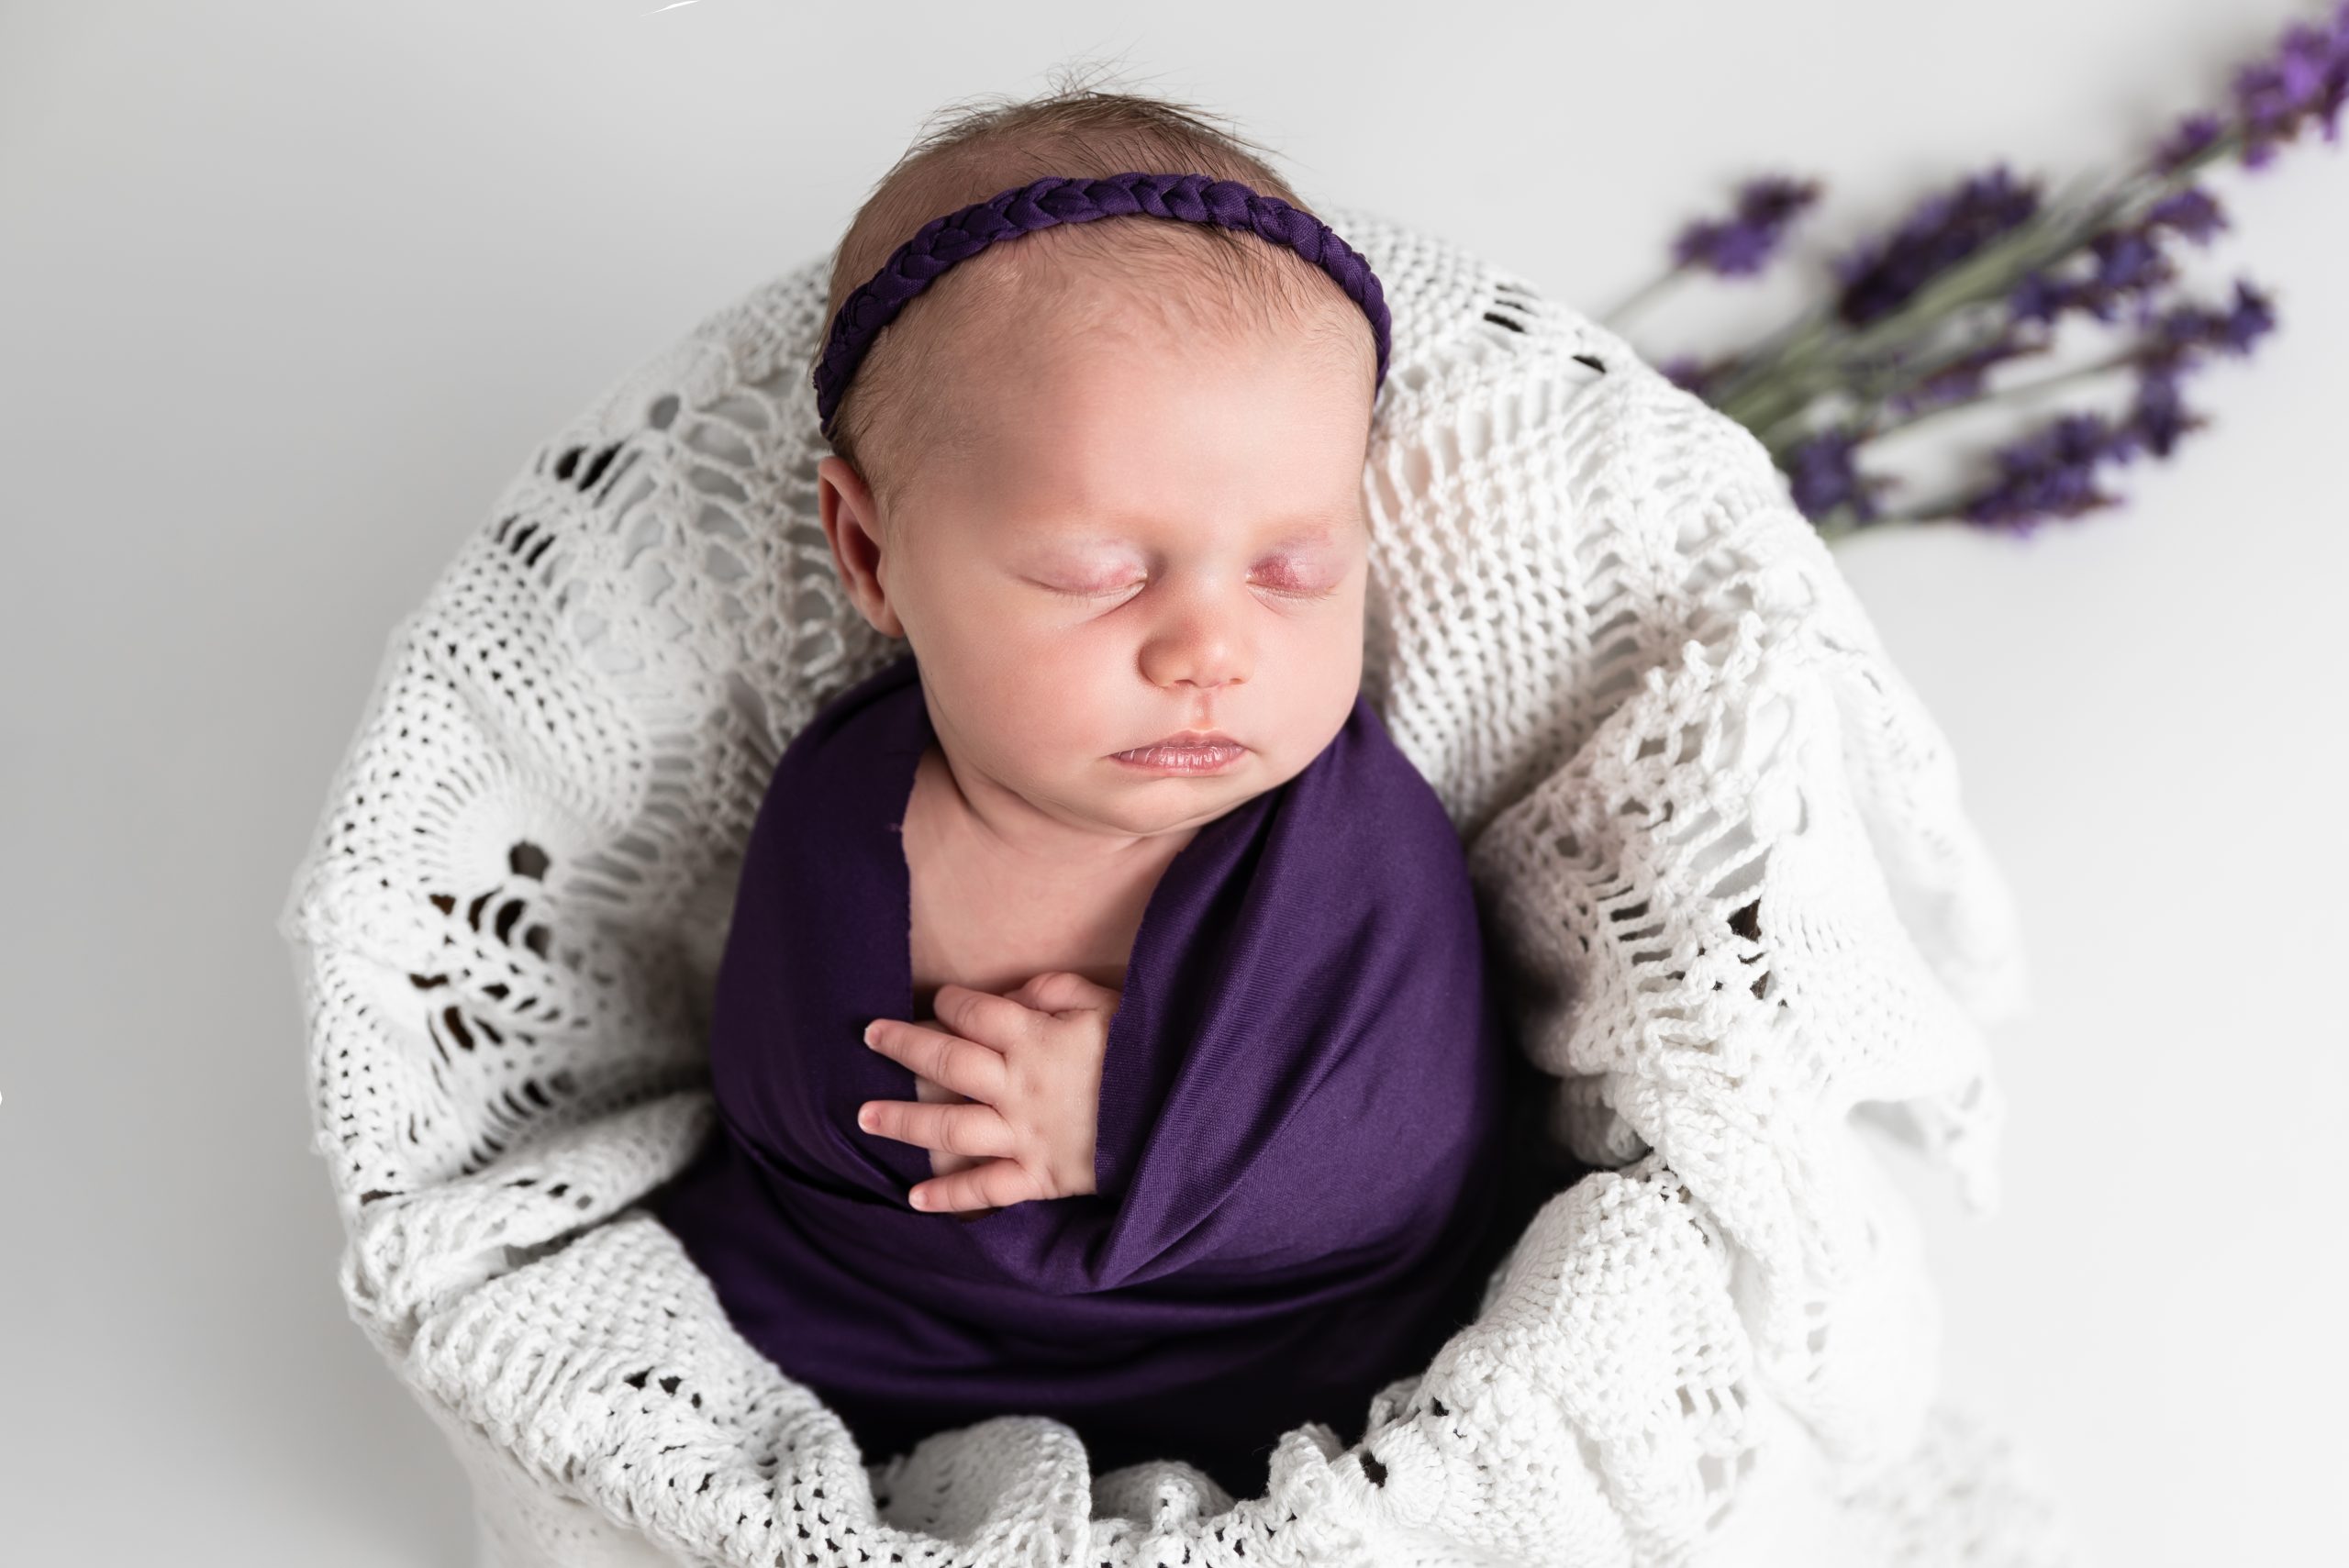 Is Newborn Photography Safe?